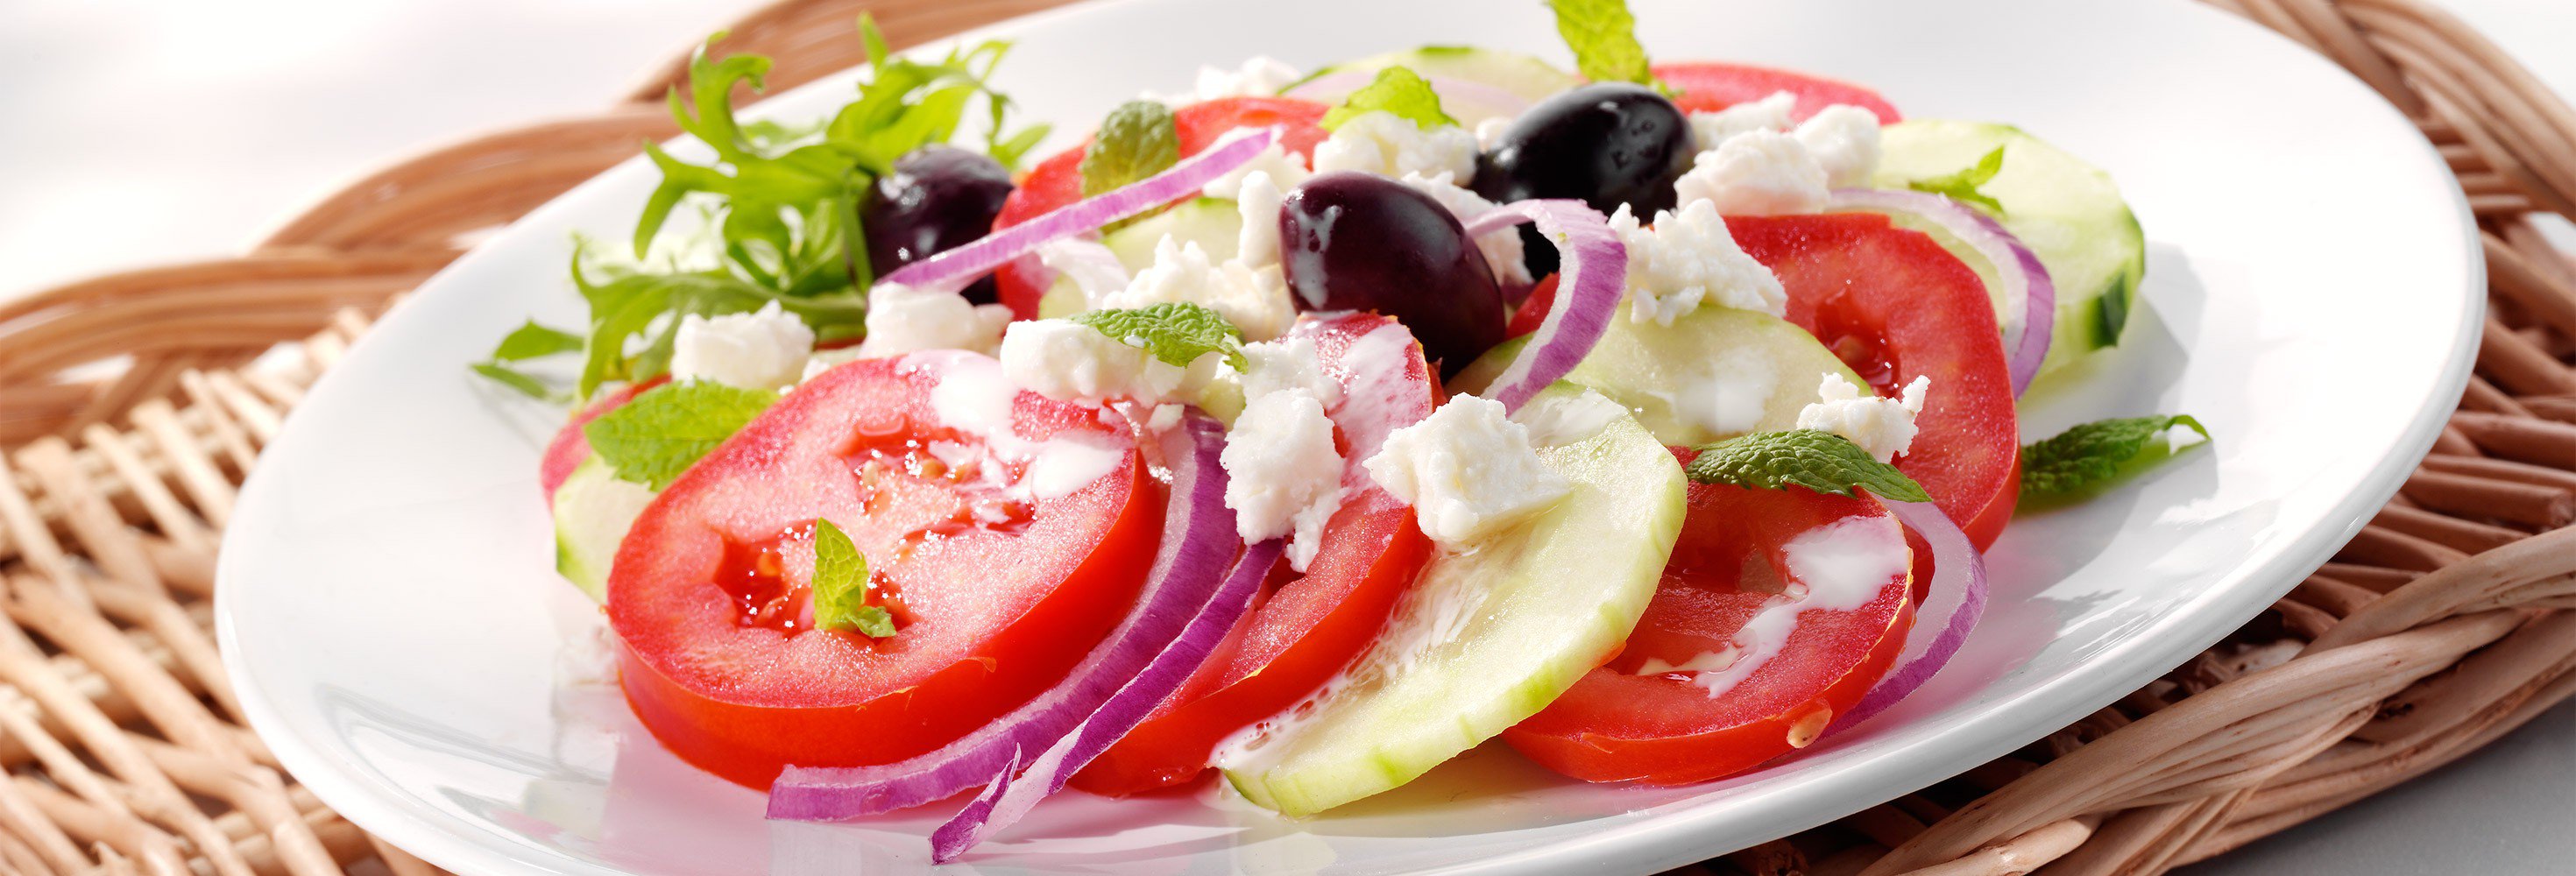 Salade grecque aux olives